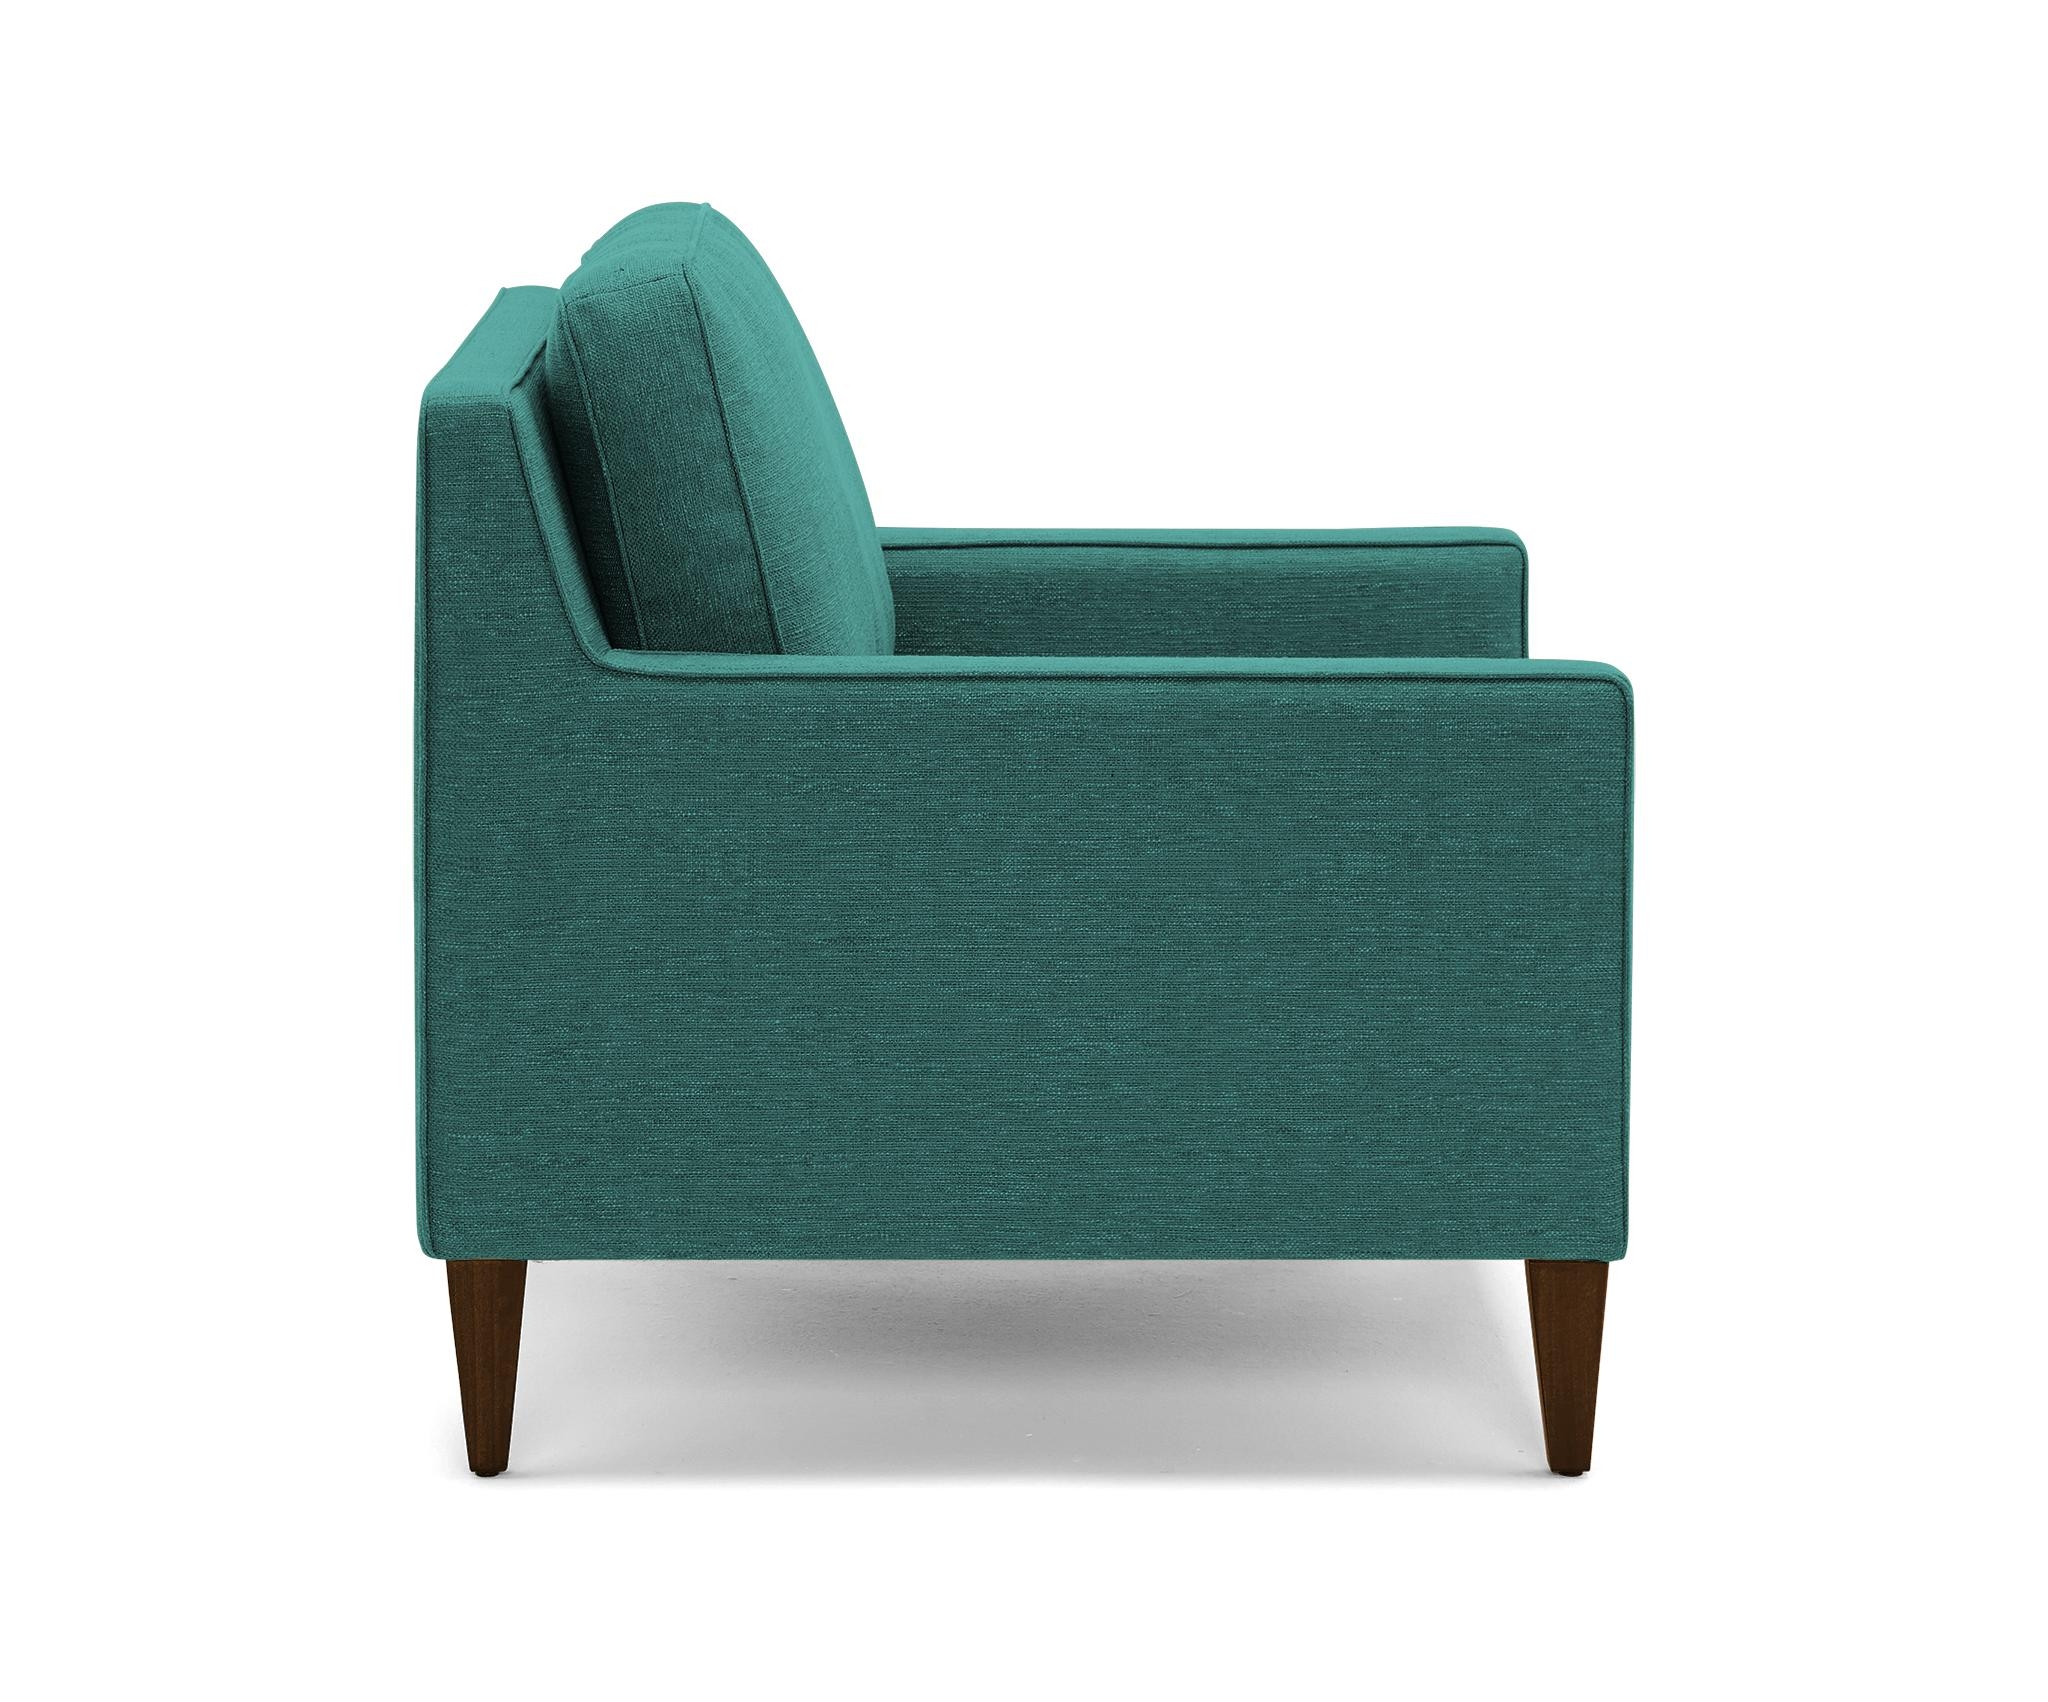 Green Levi Mid Century Modern Chair - Essence Aqua - Mocha - Image 2